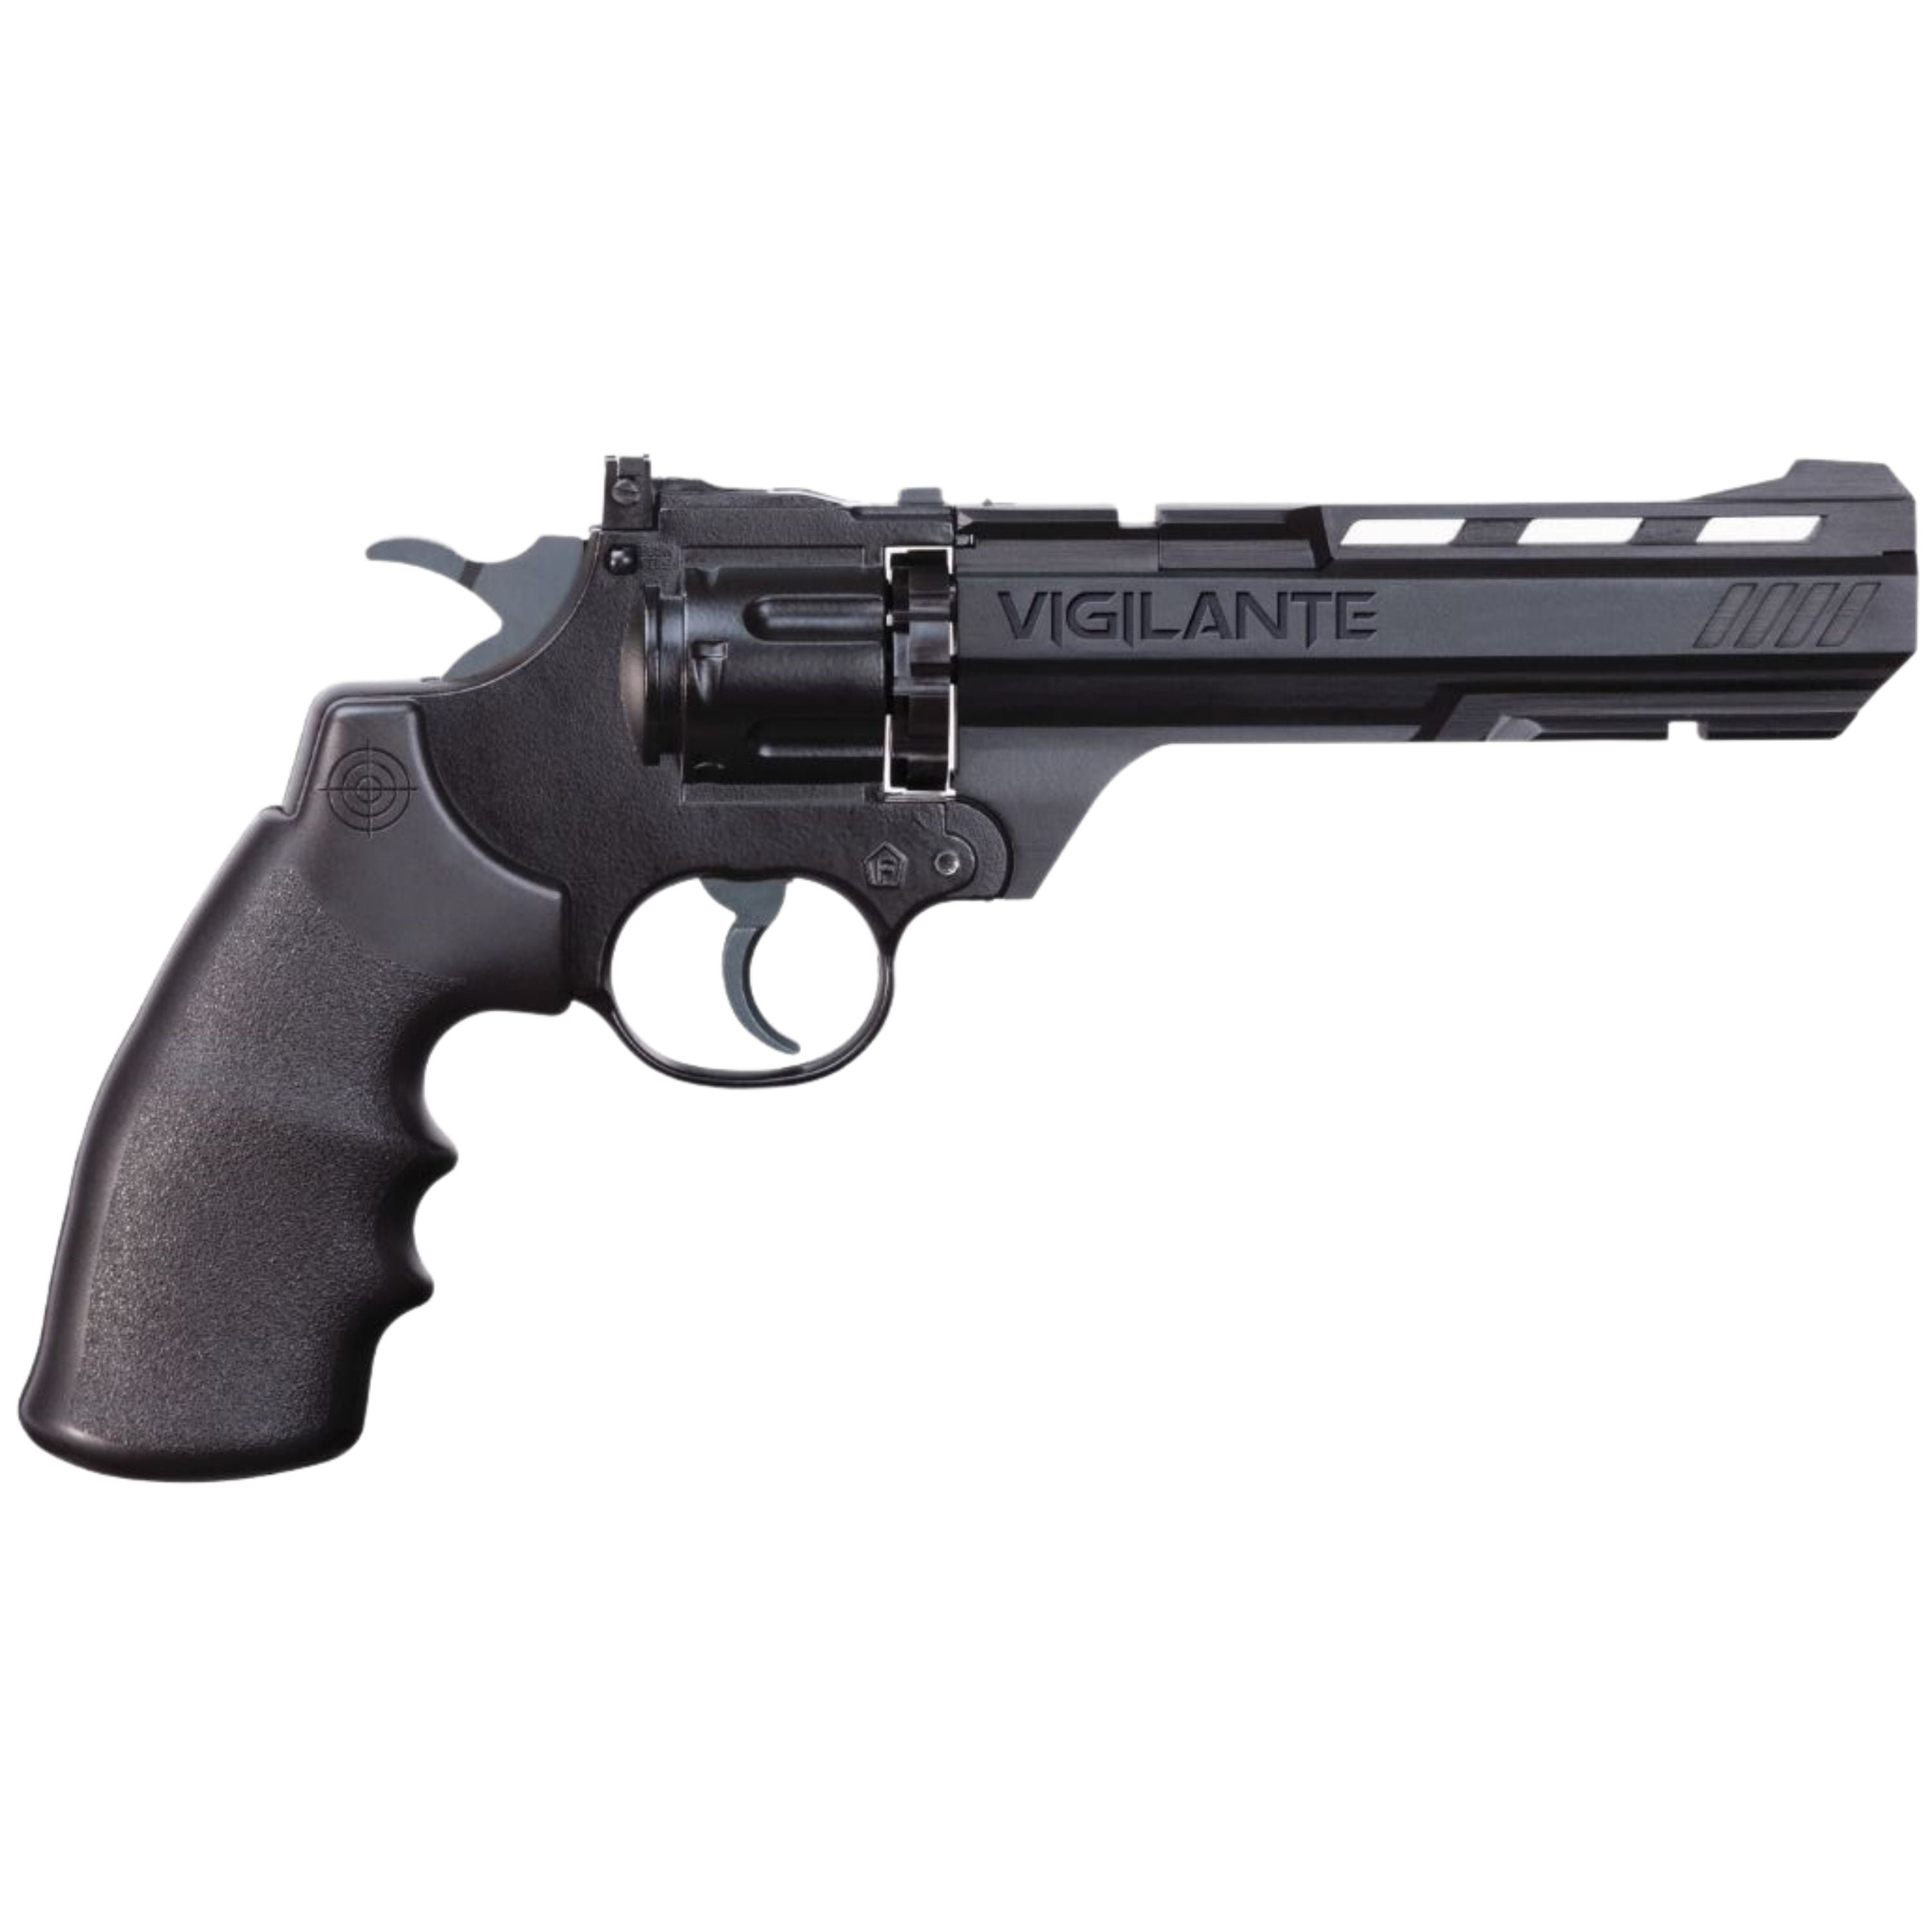 Revolver à plombs “Vigilante”||“Vigilante“ air revolver